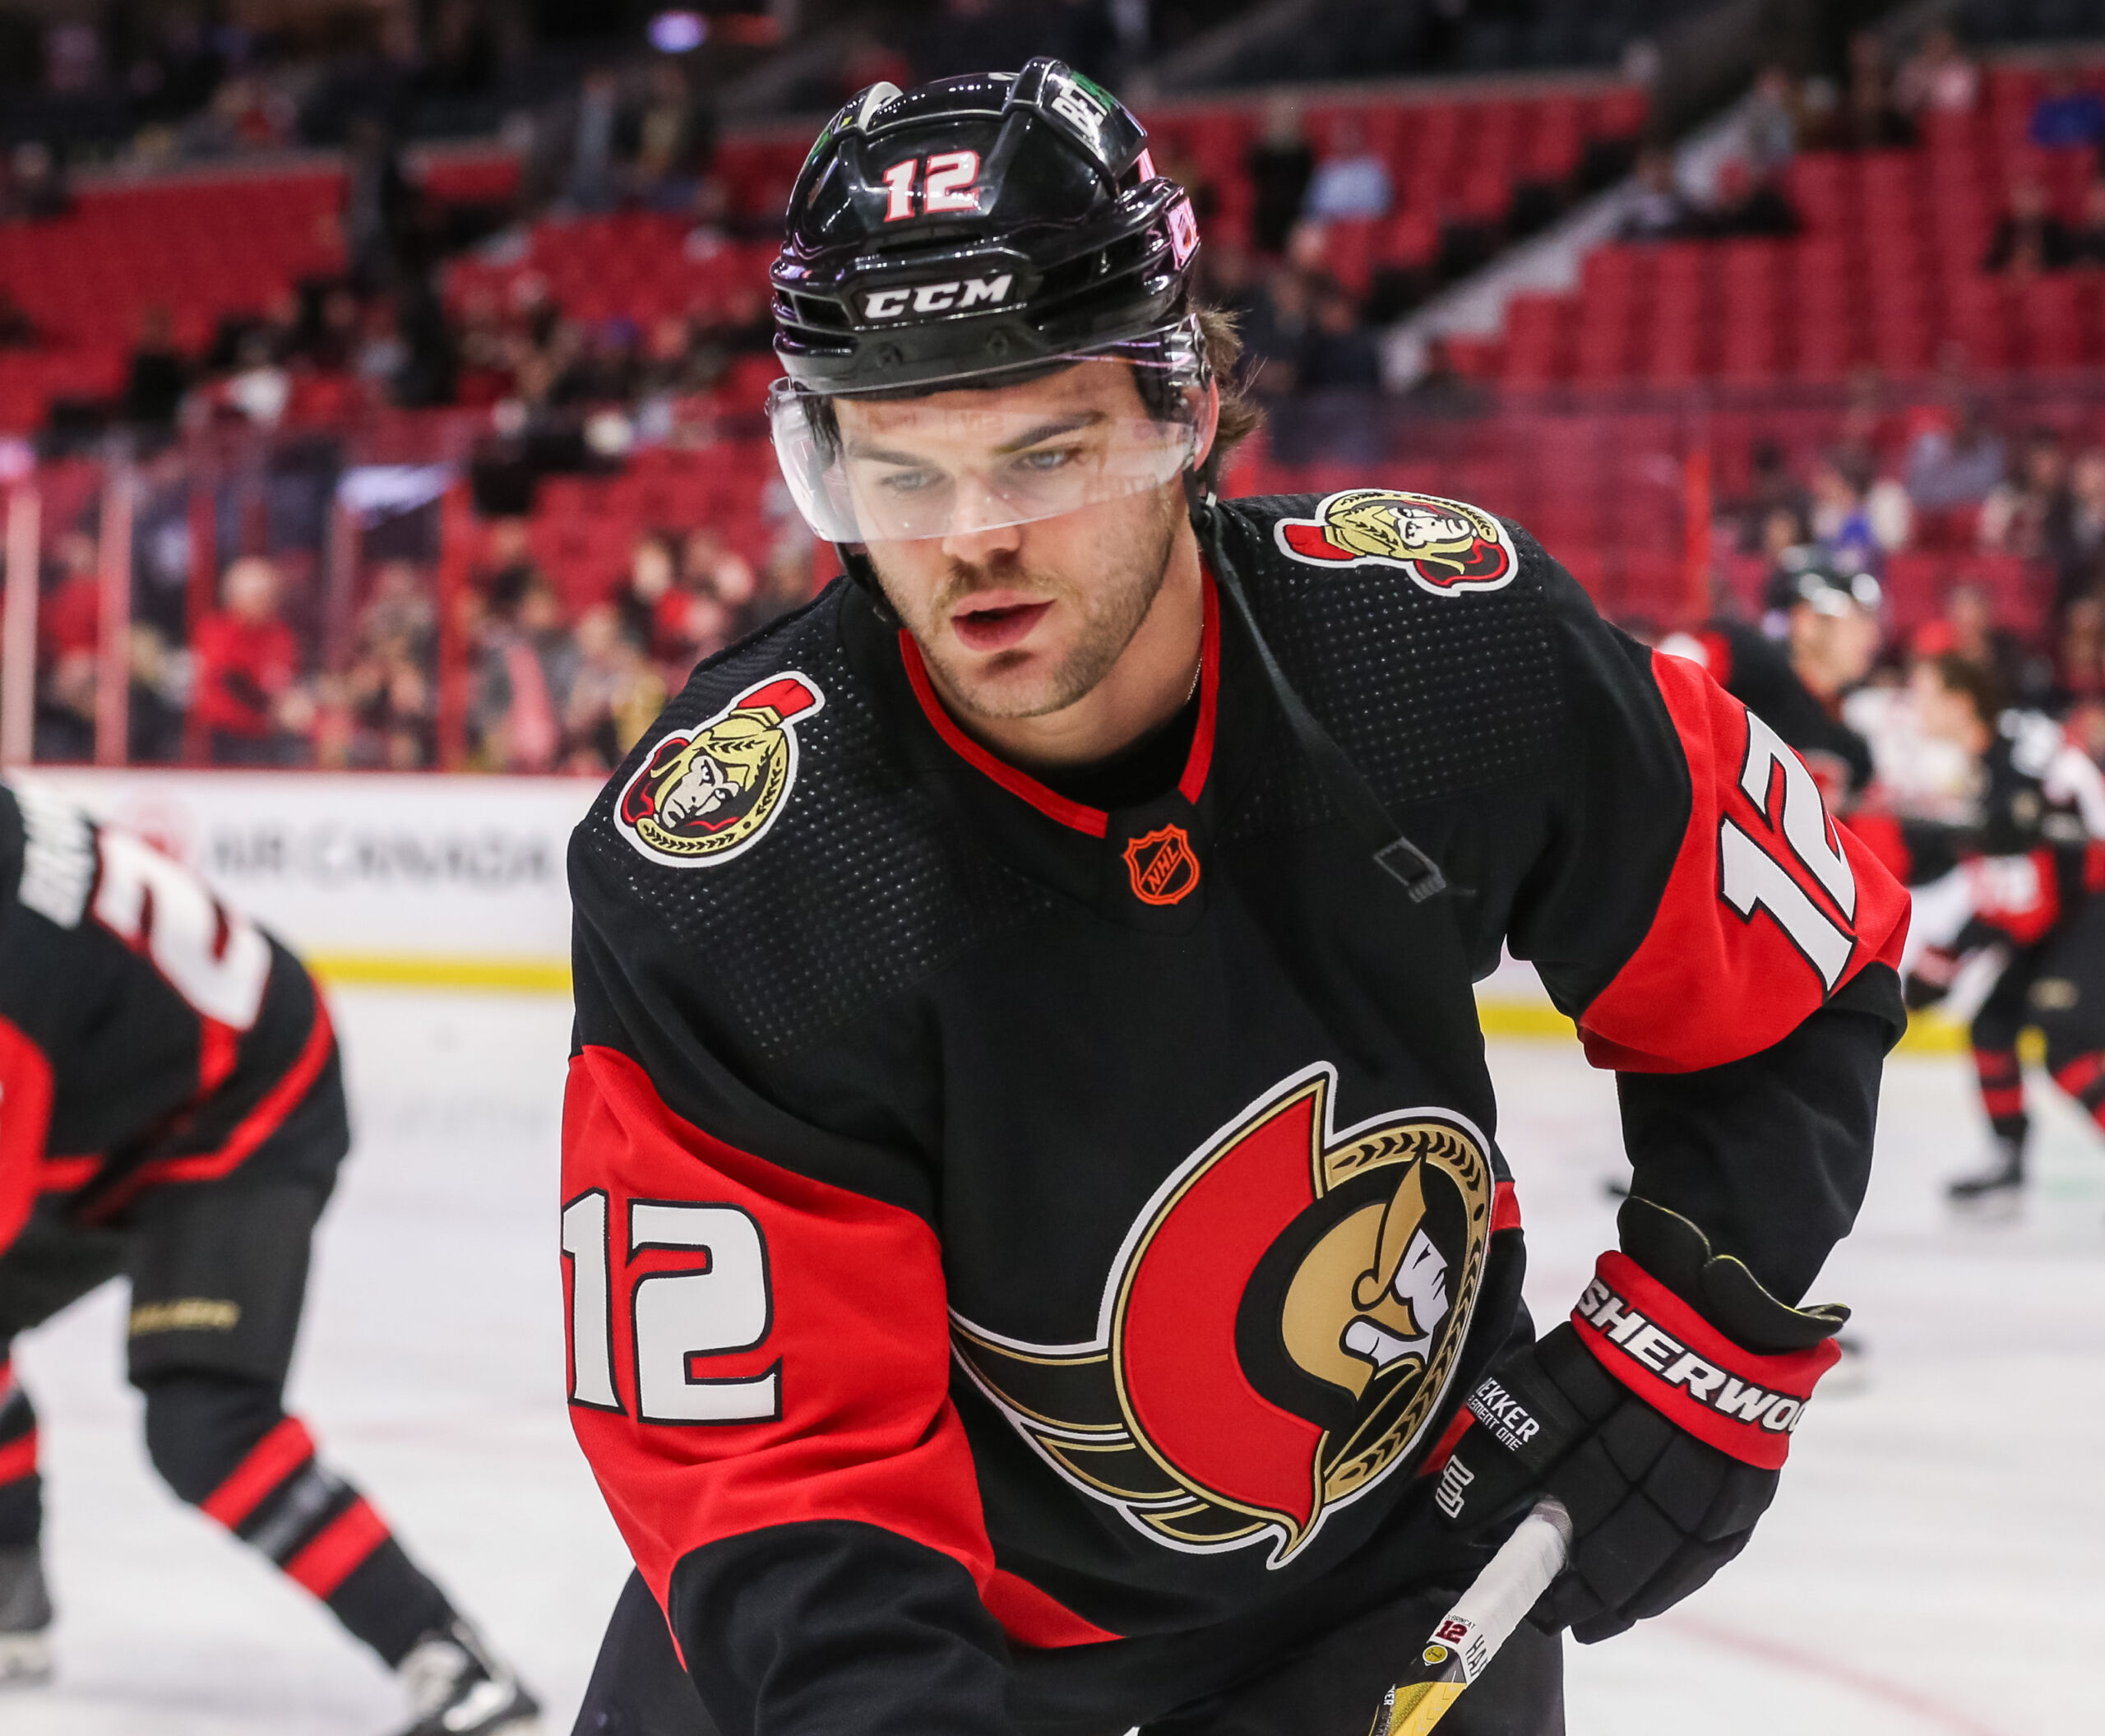 NHL Rumors: Ottawa Senators Forward to be Traded - NHL Trade Rumors 